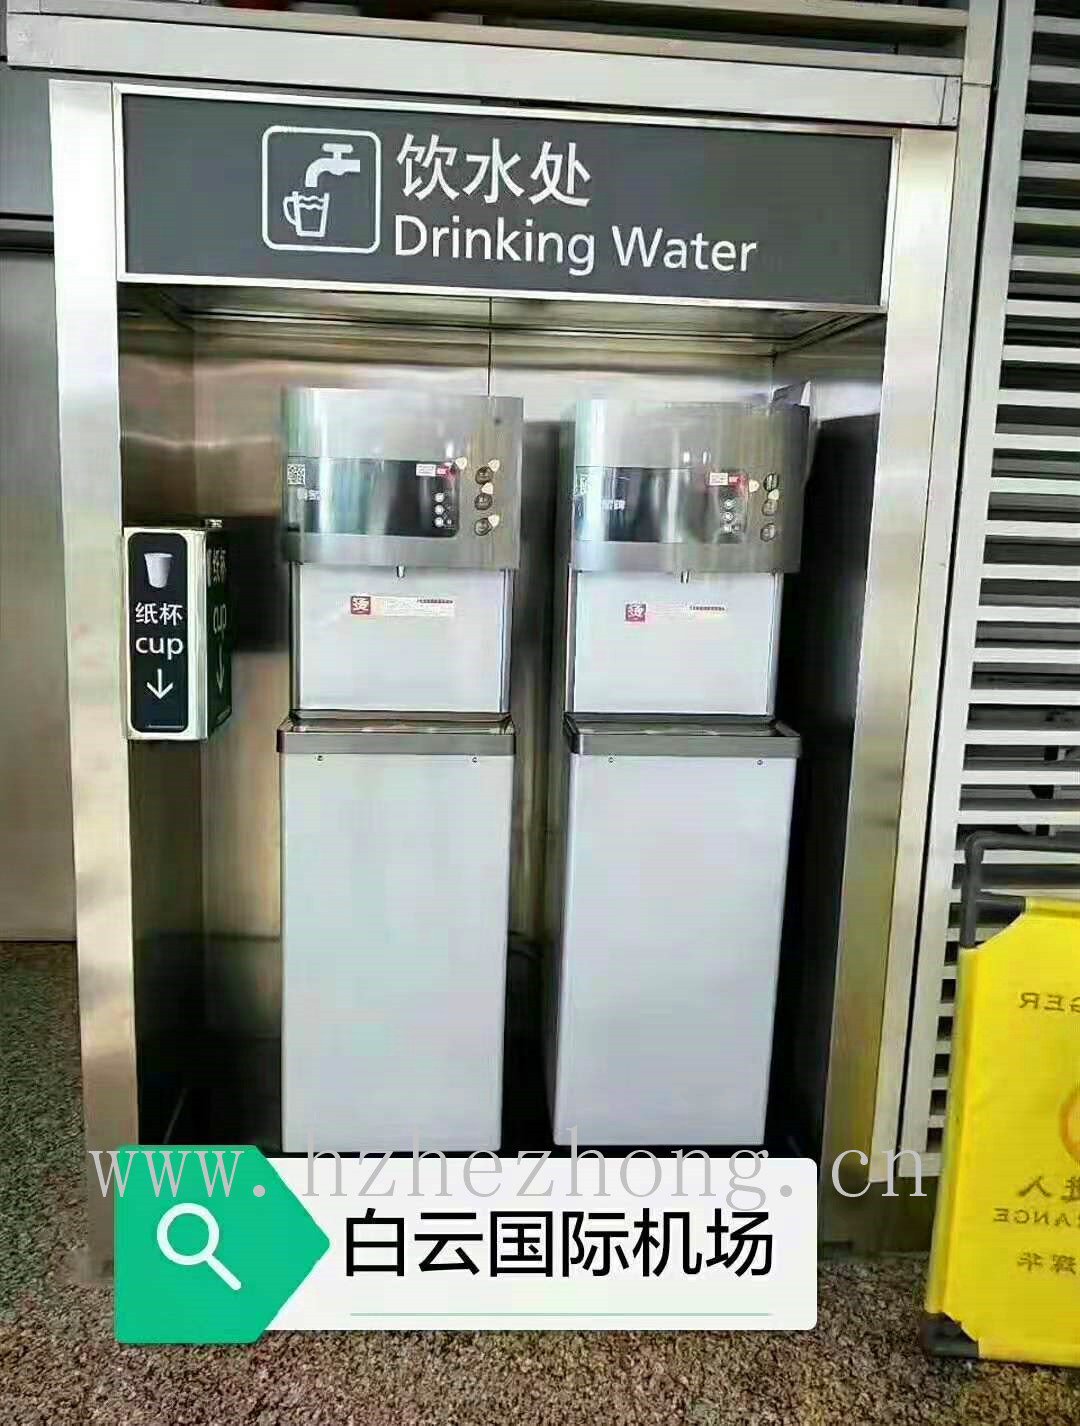 Guangzhou Baiyun International Airport uses ACUO brand water dispenser